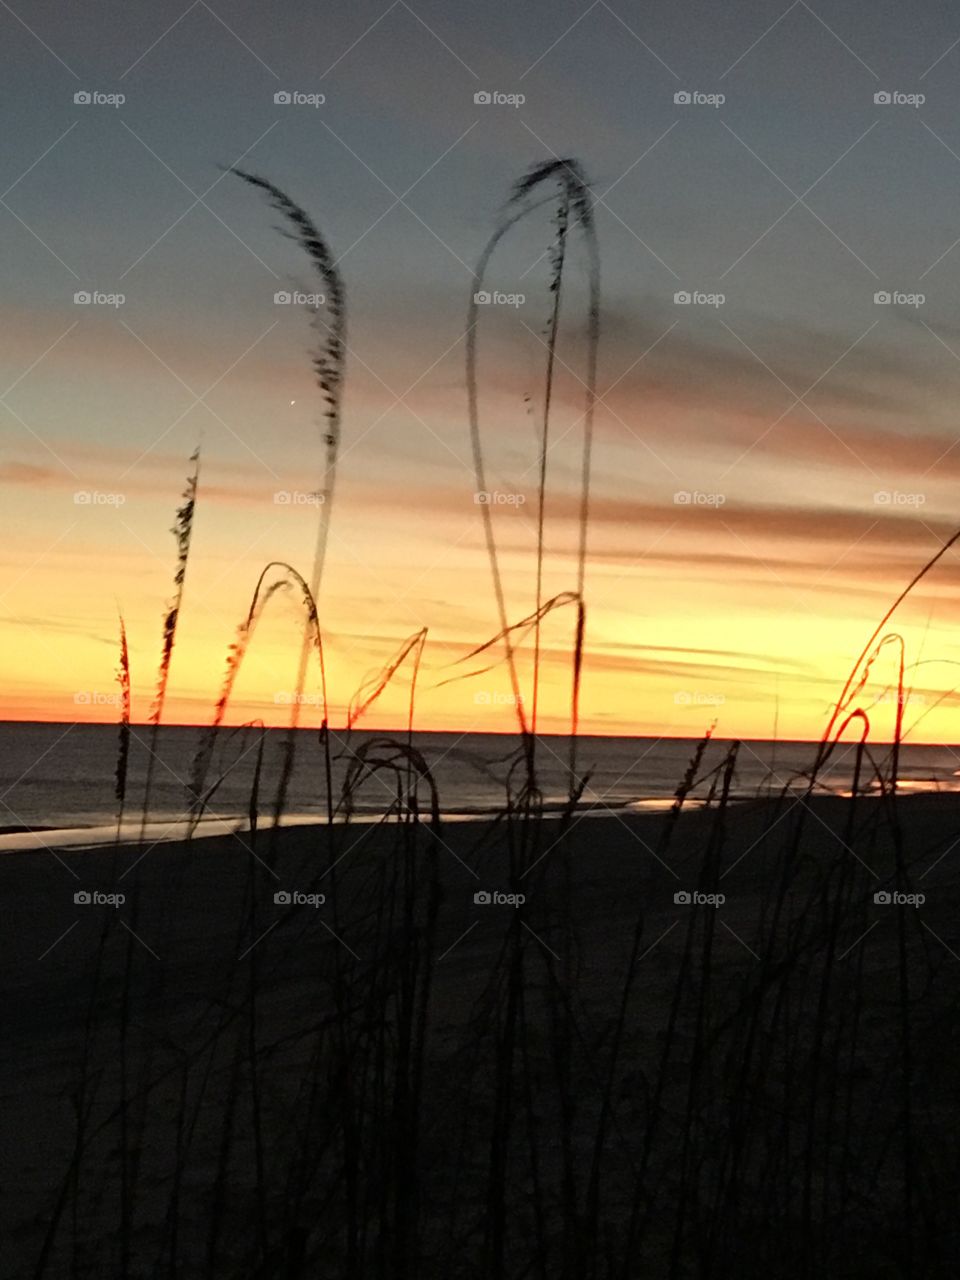 Beach at sunset 